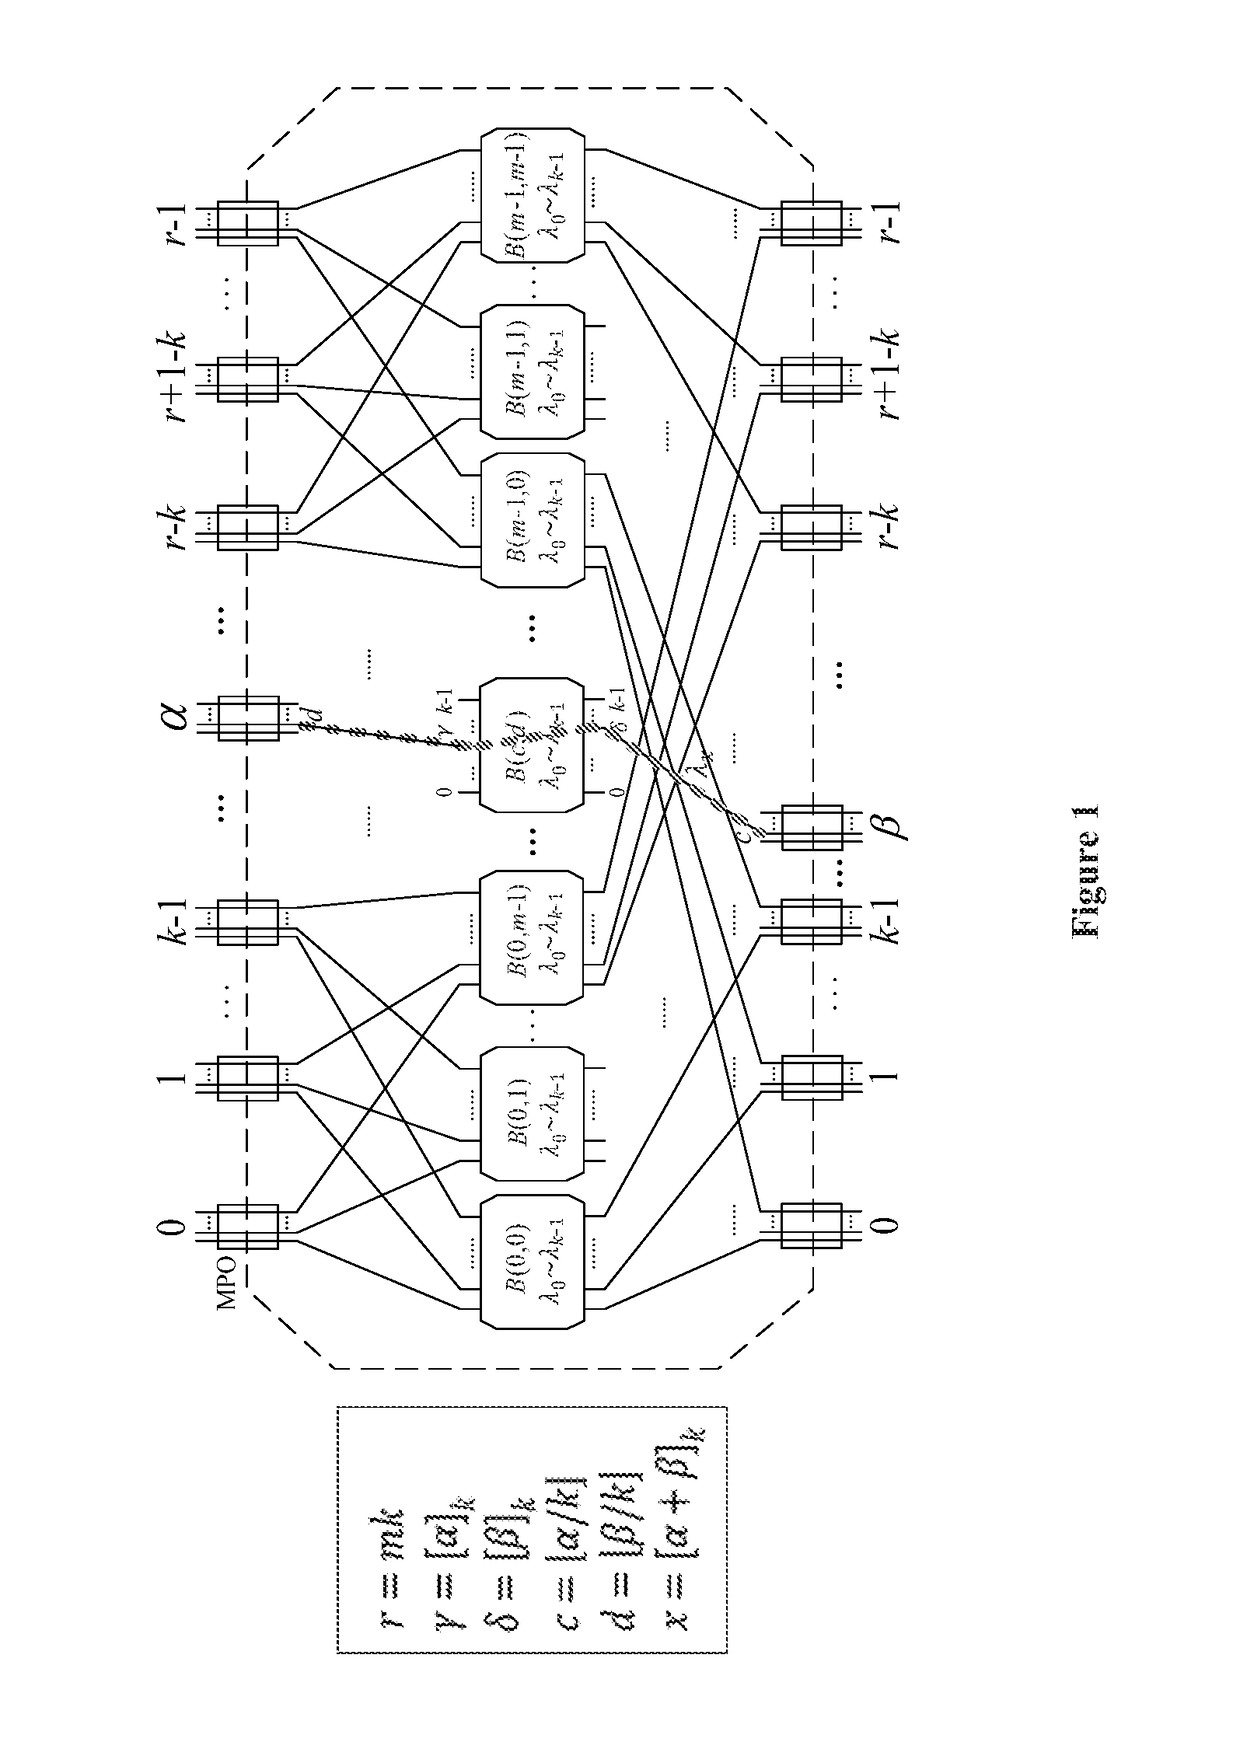 Arrayed waveguide grating based multi-core and multi-wavelength short-range interconnection network